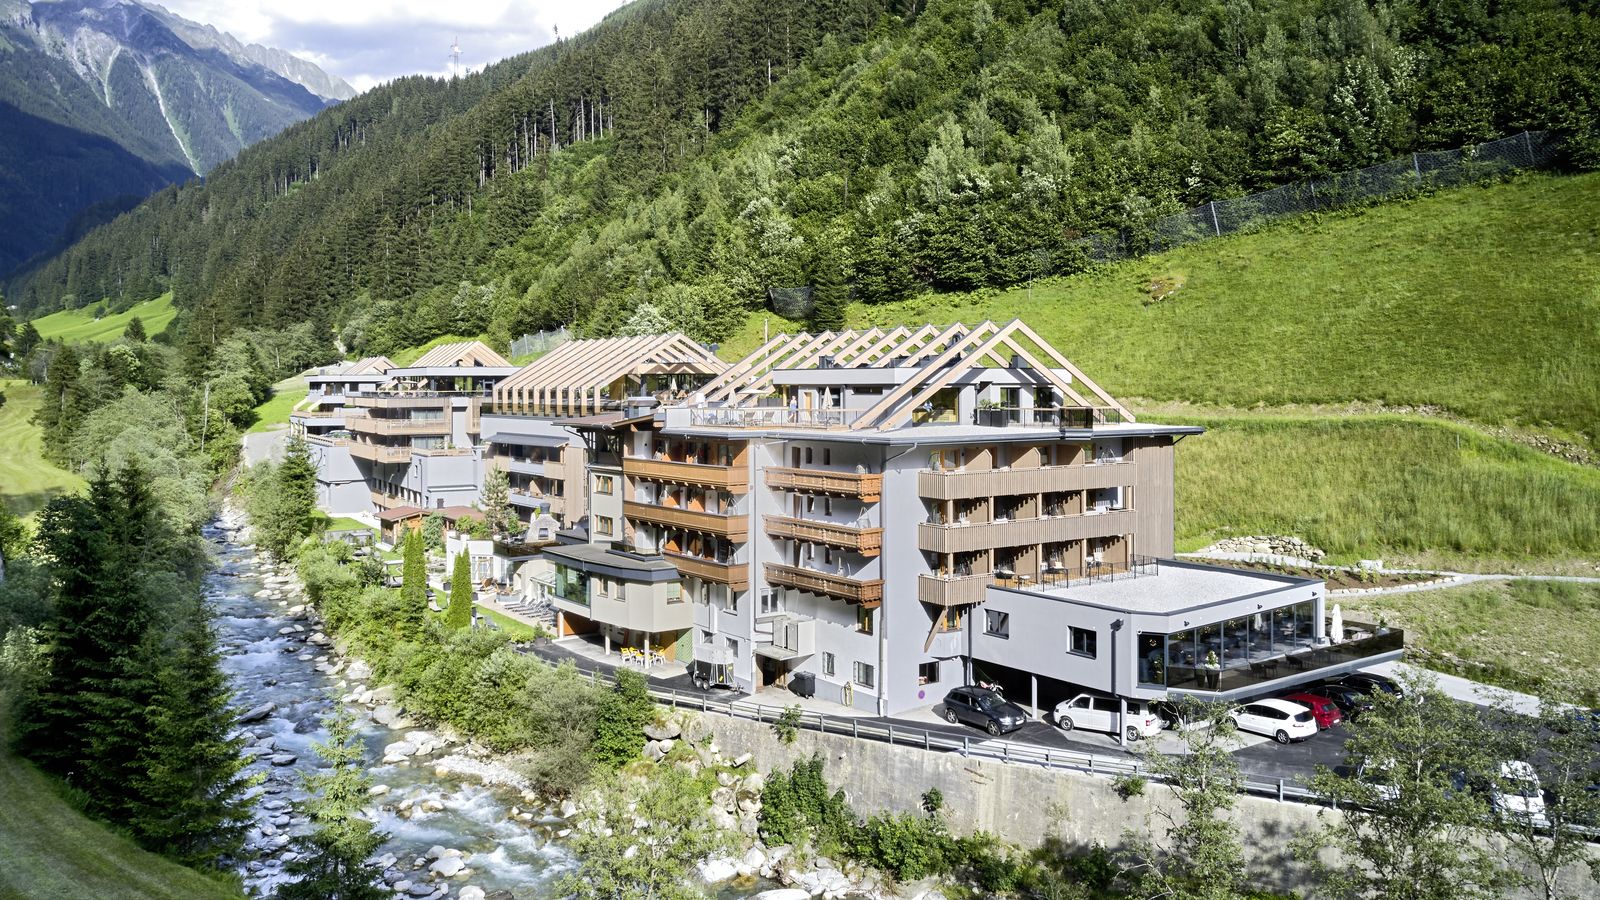 https://www.youtube.com/watch?v=xo9x9XSlSi4 - ZillergrundRock Luxury Mountain Resort